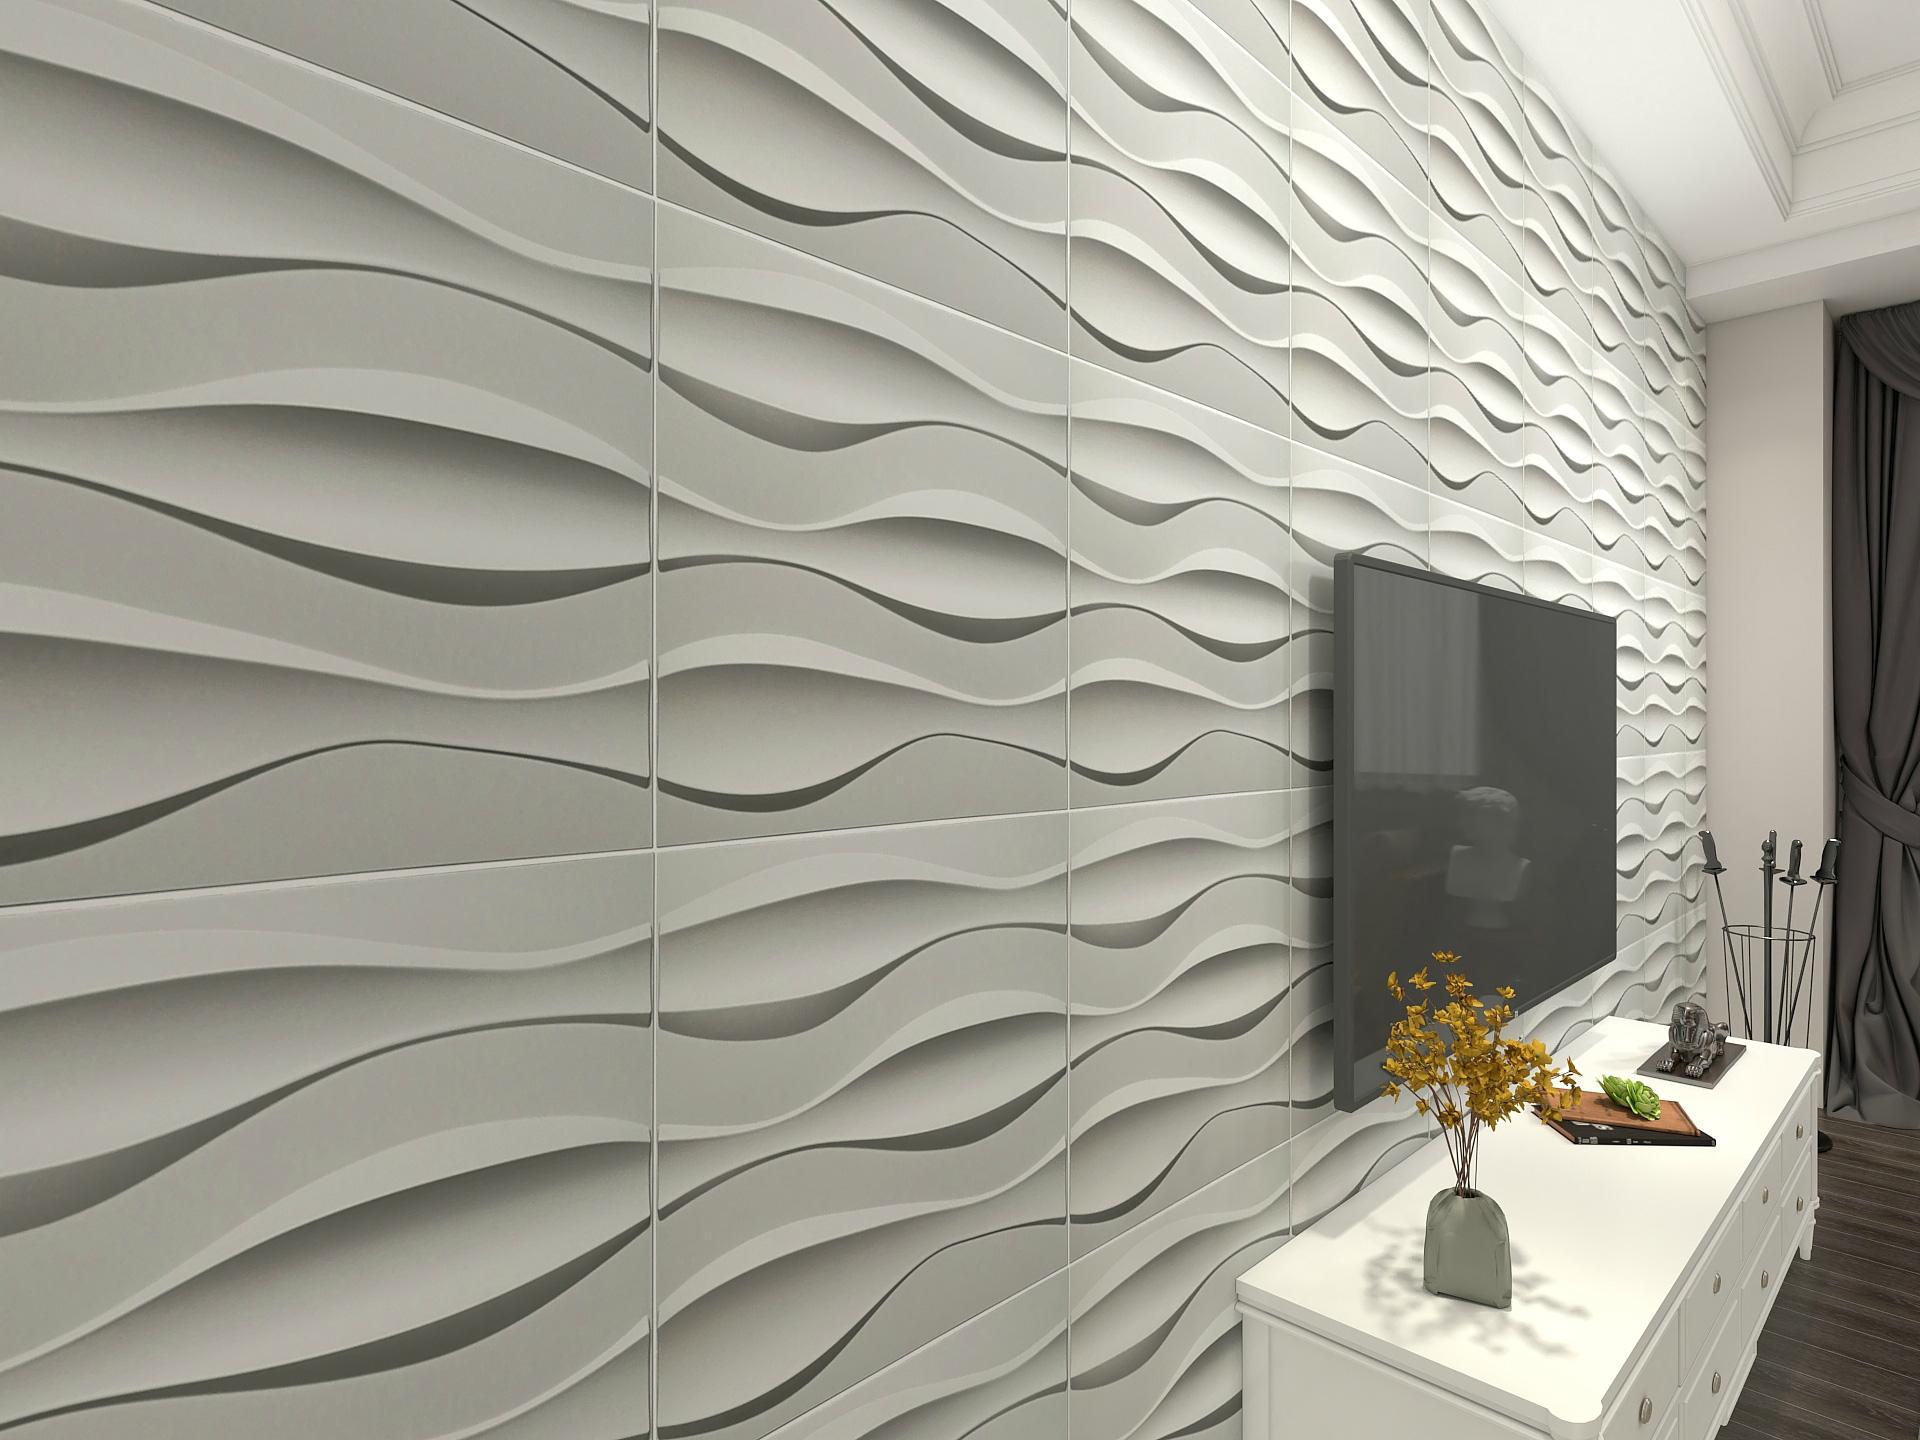 Textures PVC Wall Panels, 19.7" x 19.7" Big Wave, 12 Tiles